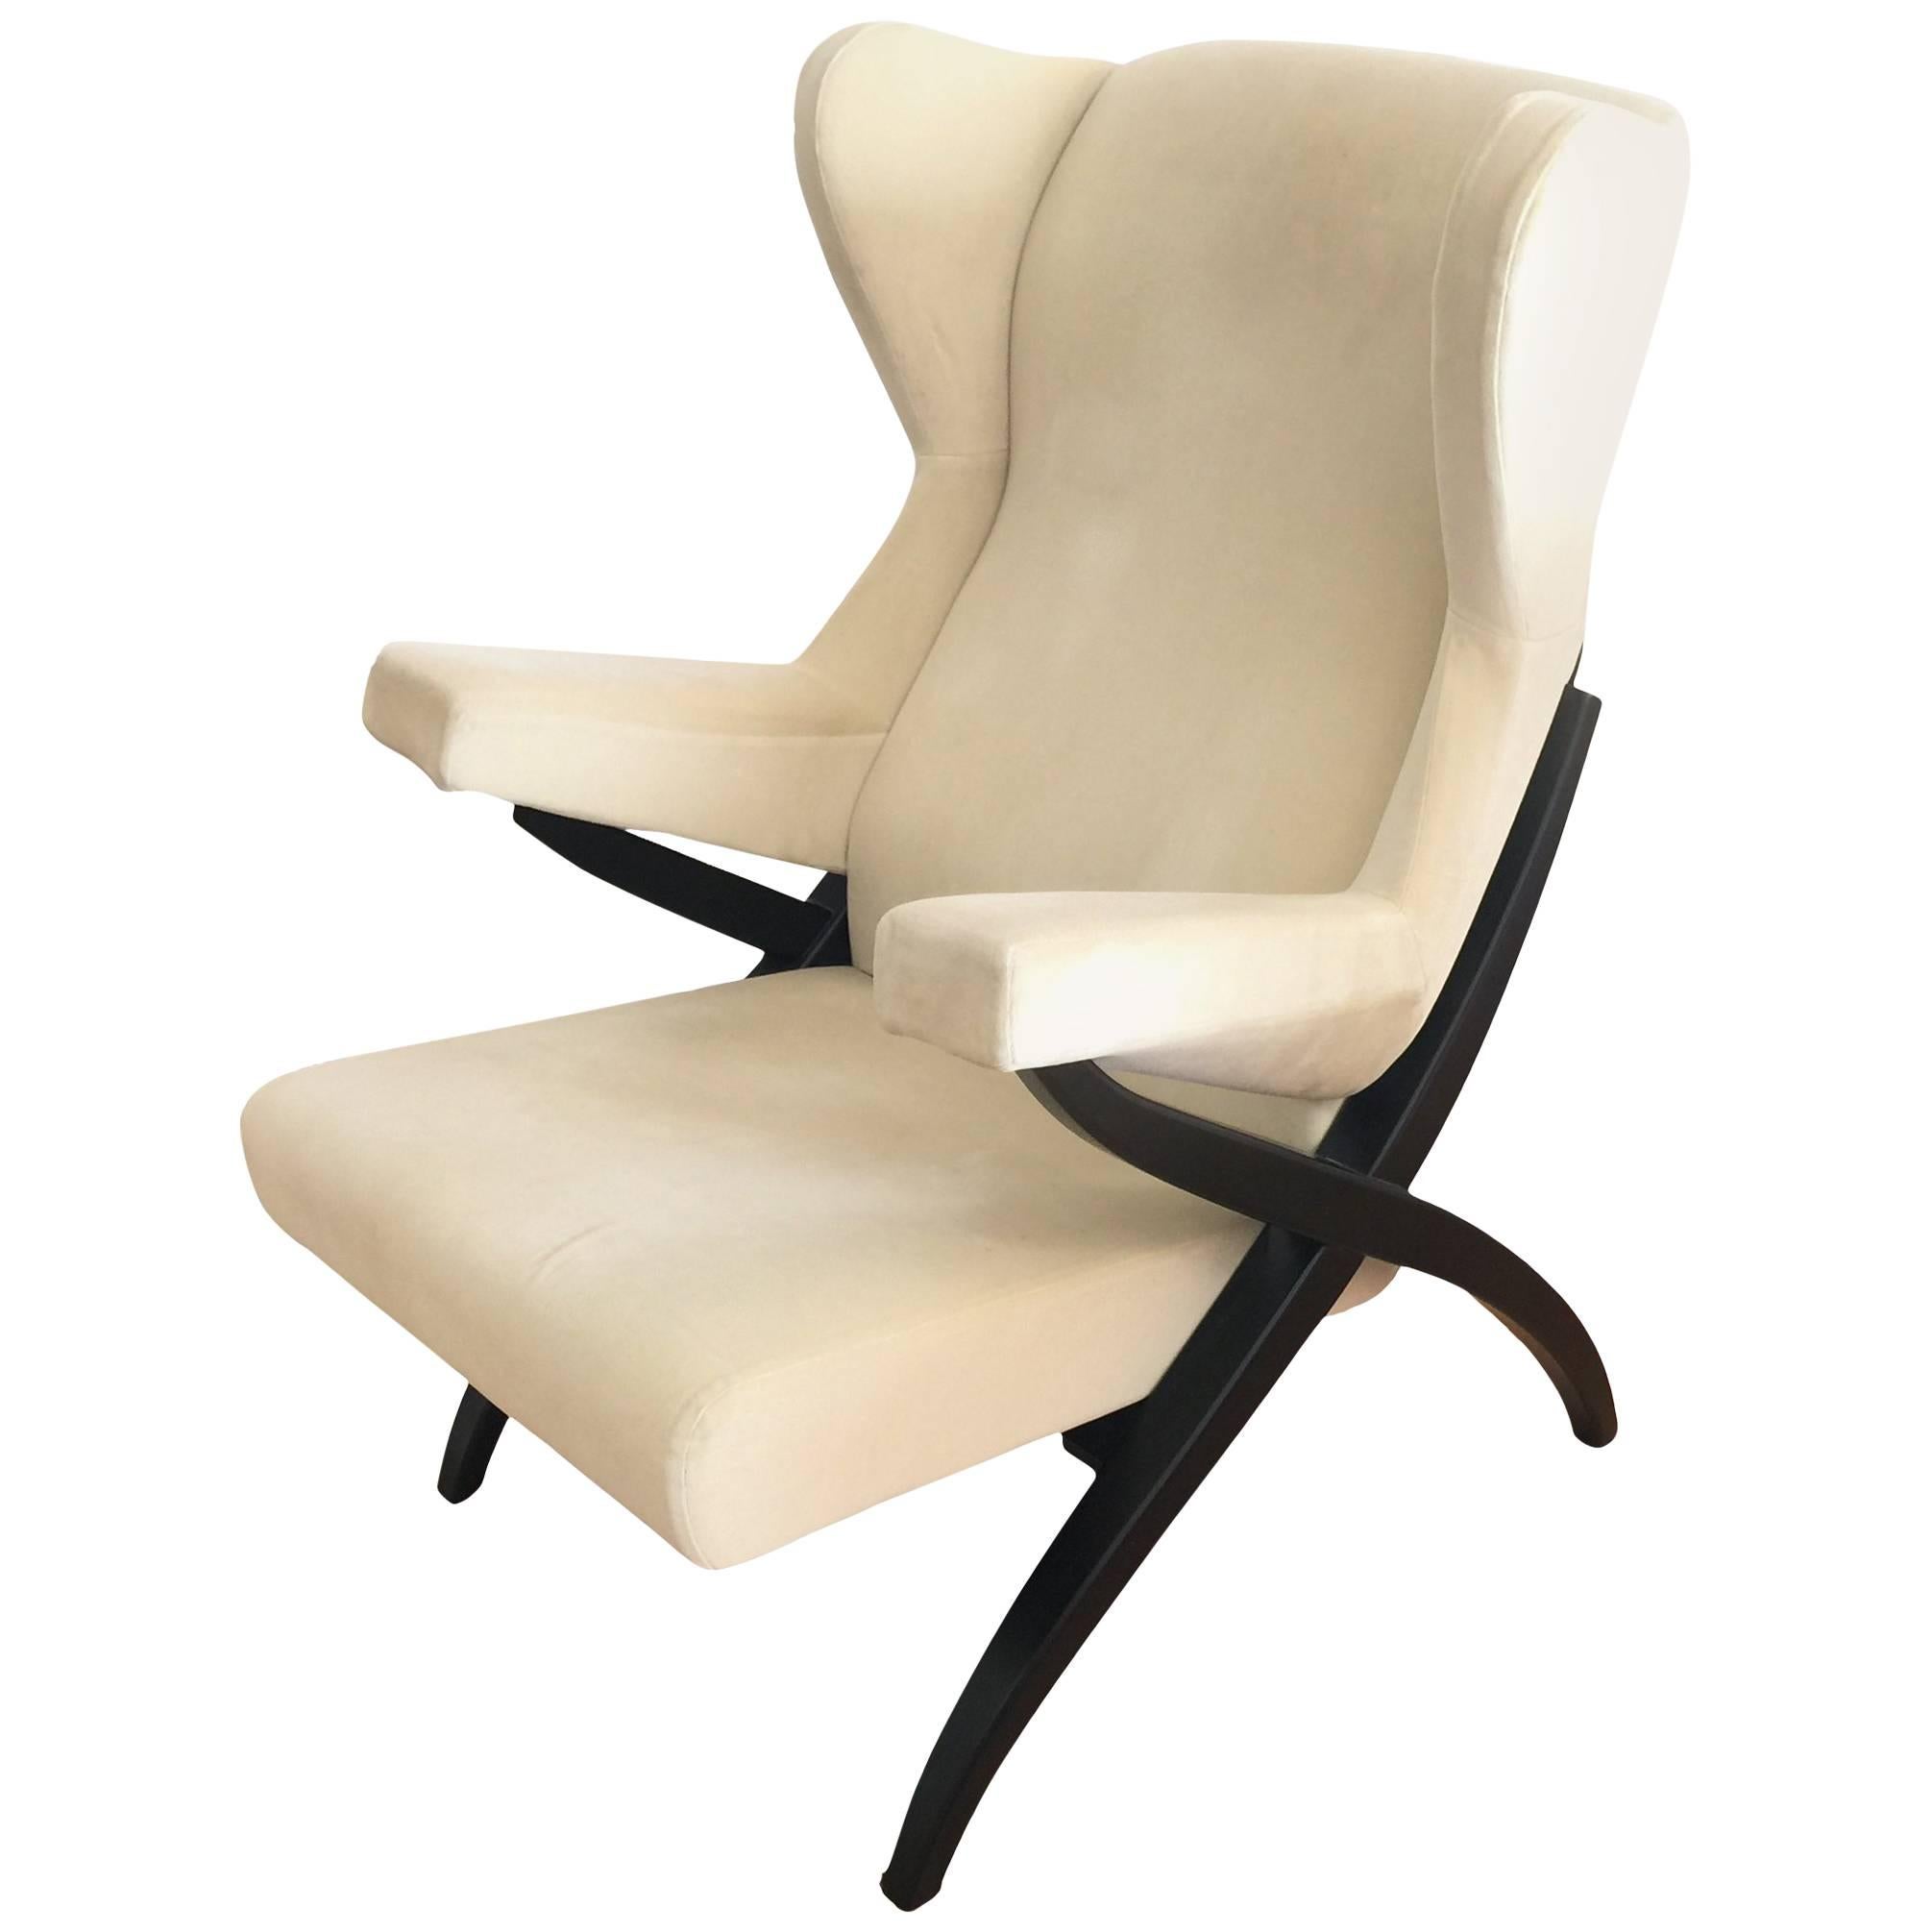 Fiorenza Lounge Chair Design by Franco Albini 1952 for Arflex, Velvet Cotton